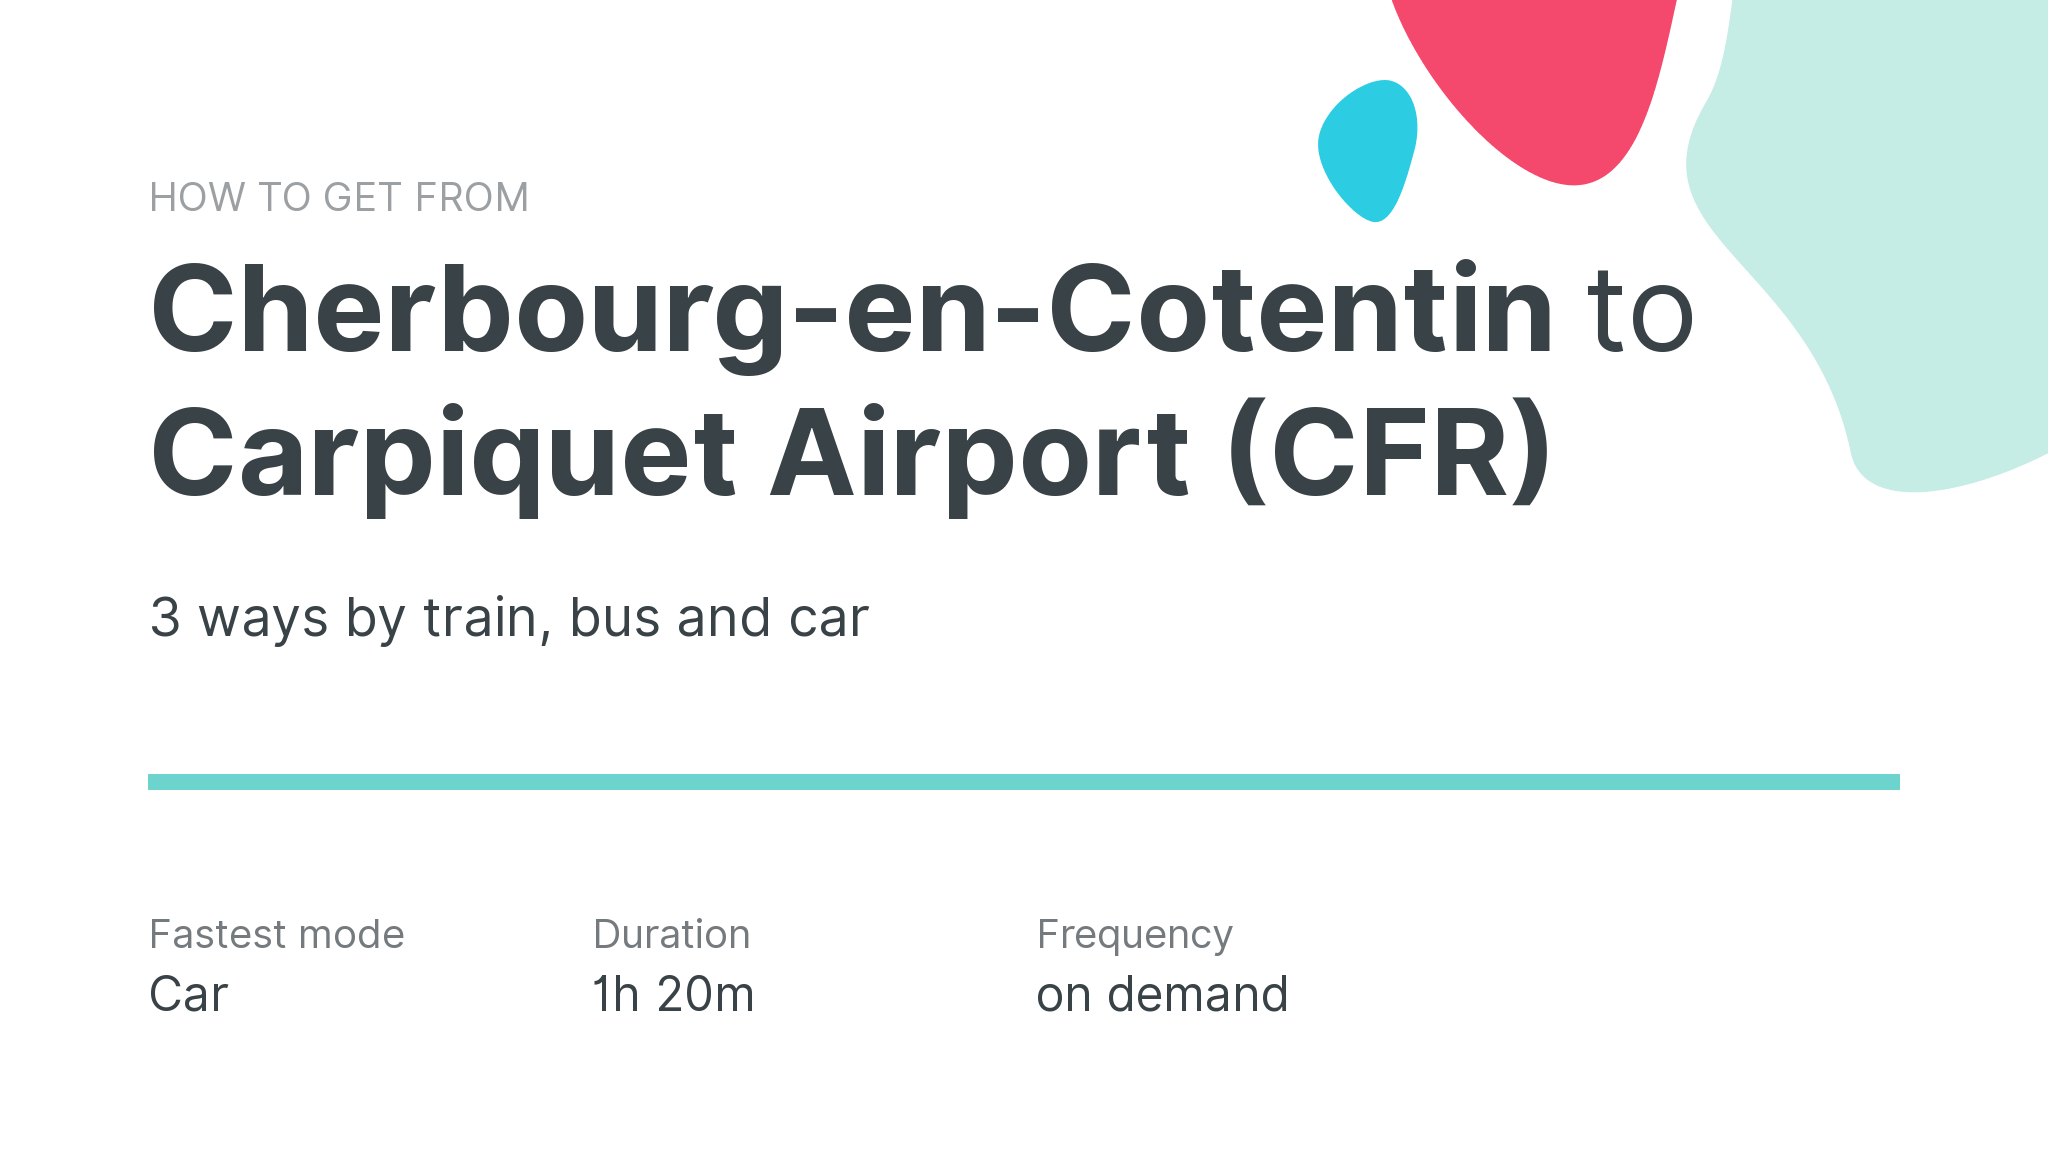 How do I get from Cherbourg-en-Cotentin to Carpiquet Airport (CFR)